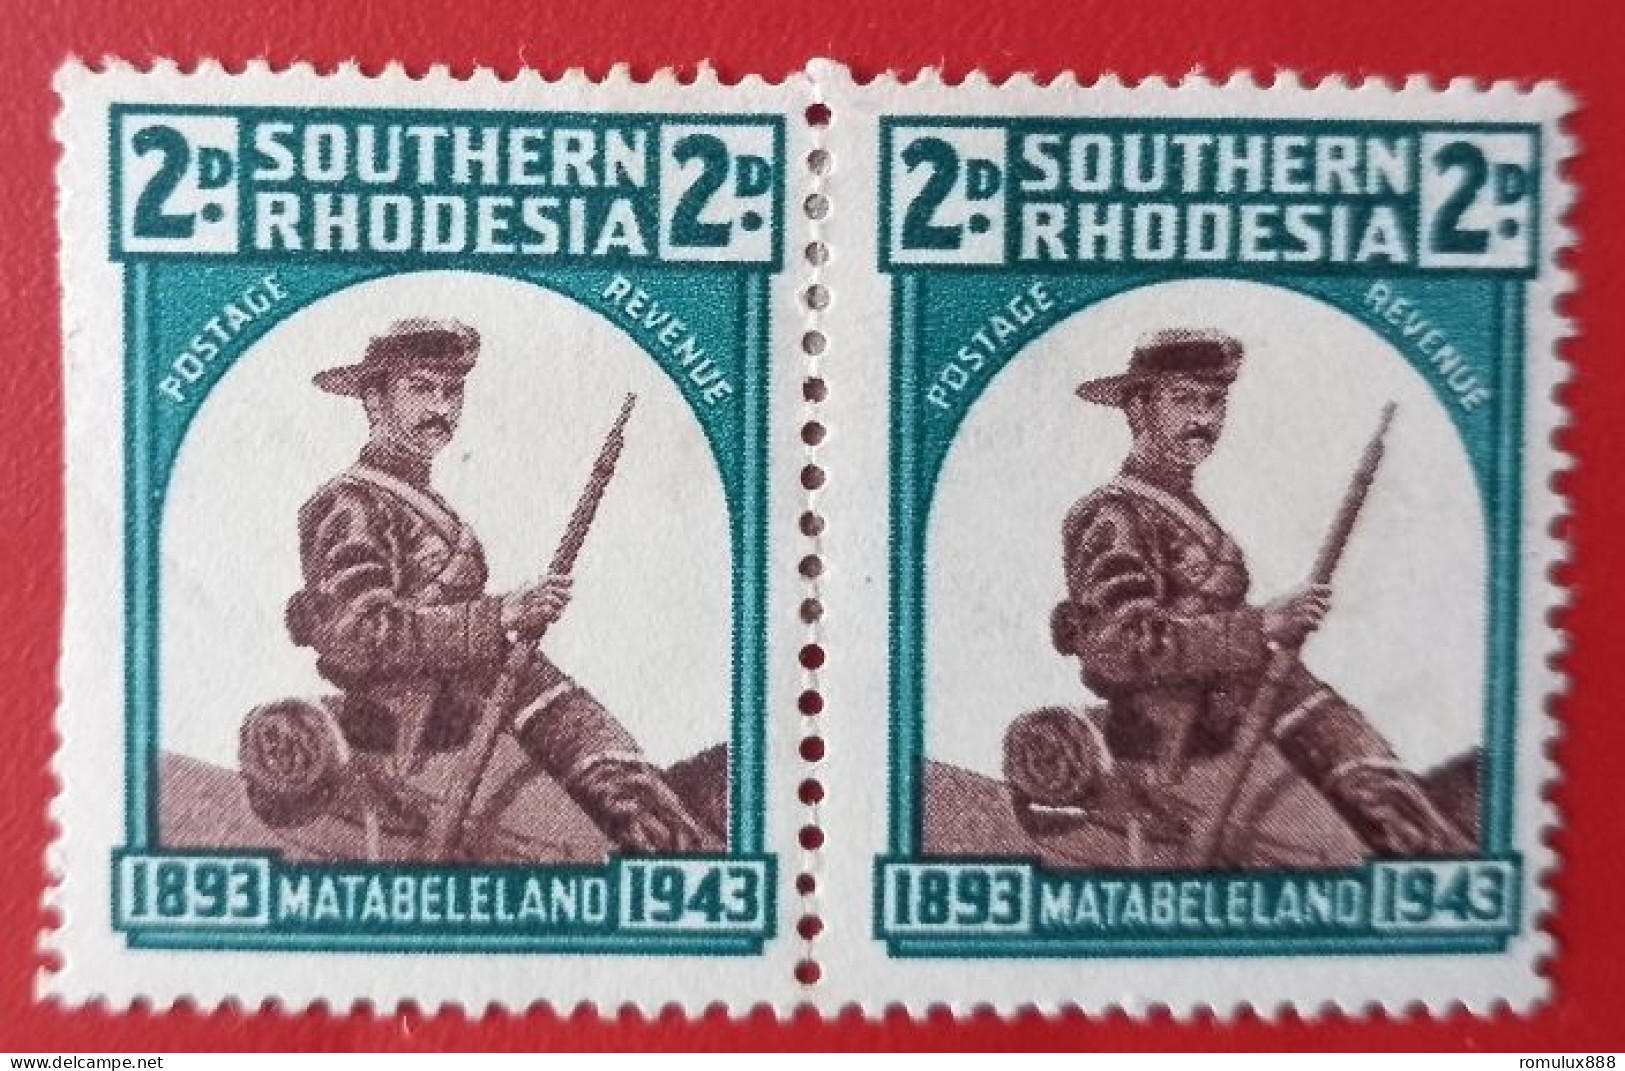 SOUTHERN RHODESIA SACC 2D WITH SADDEBAG FLAW MH - Southern Rhodesia (...-1964)